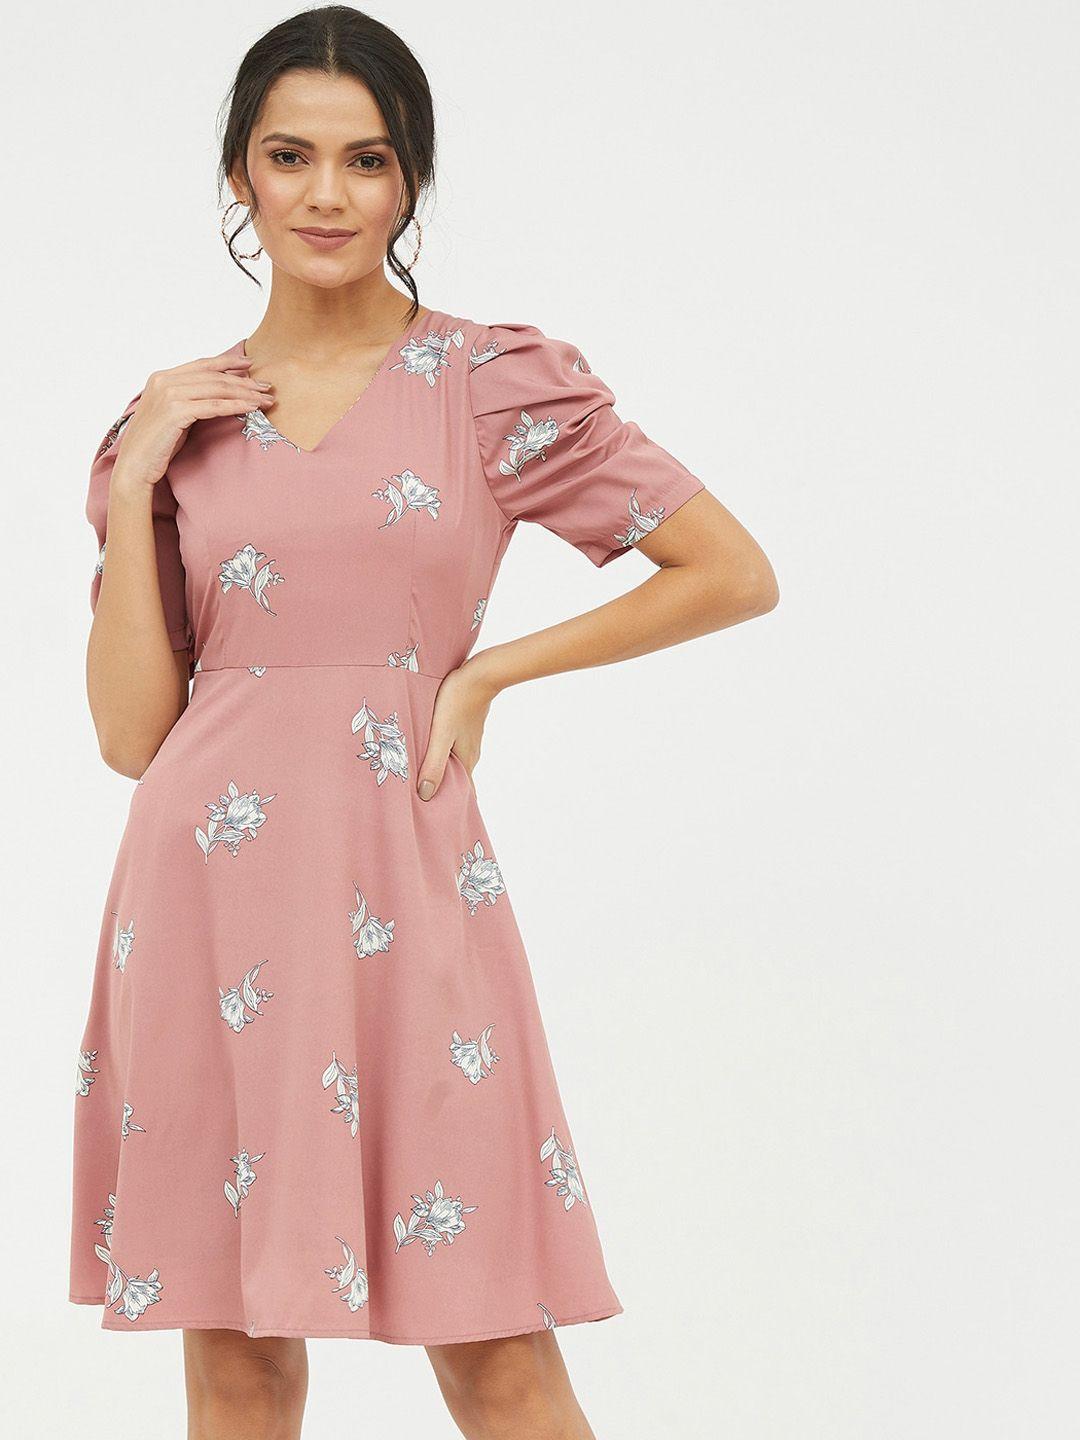 harpa pink & white floral dress